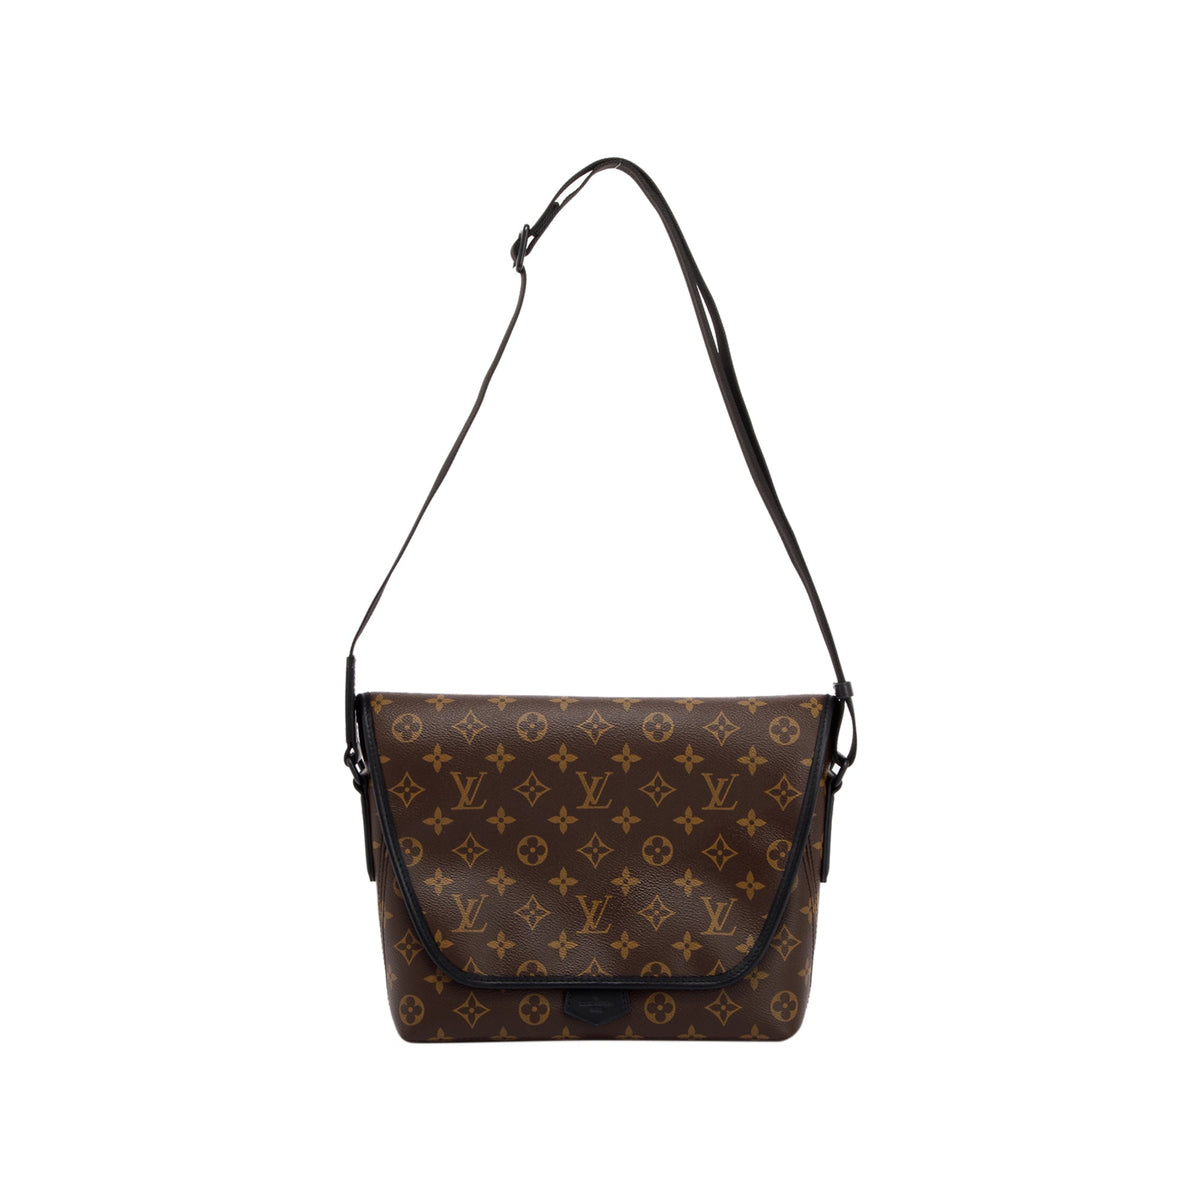 Shop Lv Box Bag online